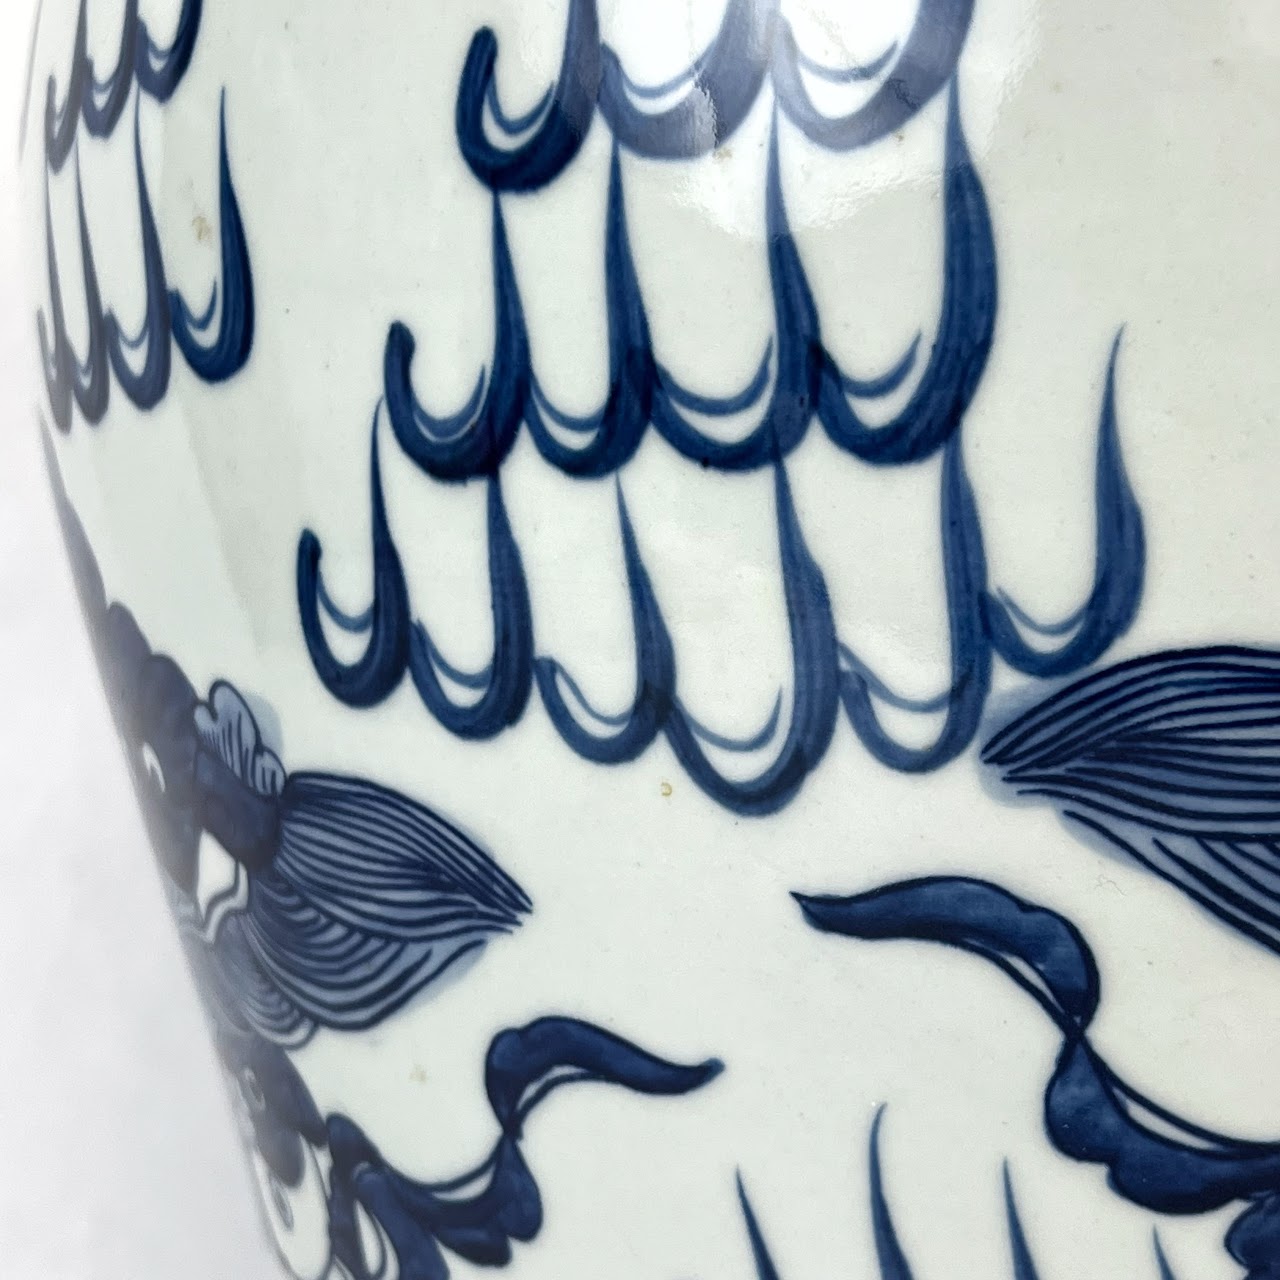 Chinese Contemporary Porcelain Dragon Garden Stool